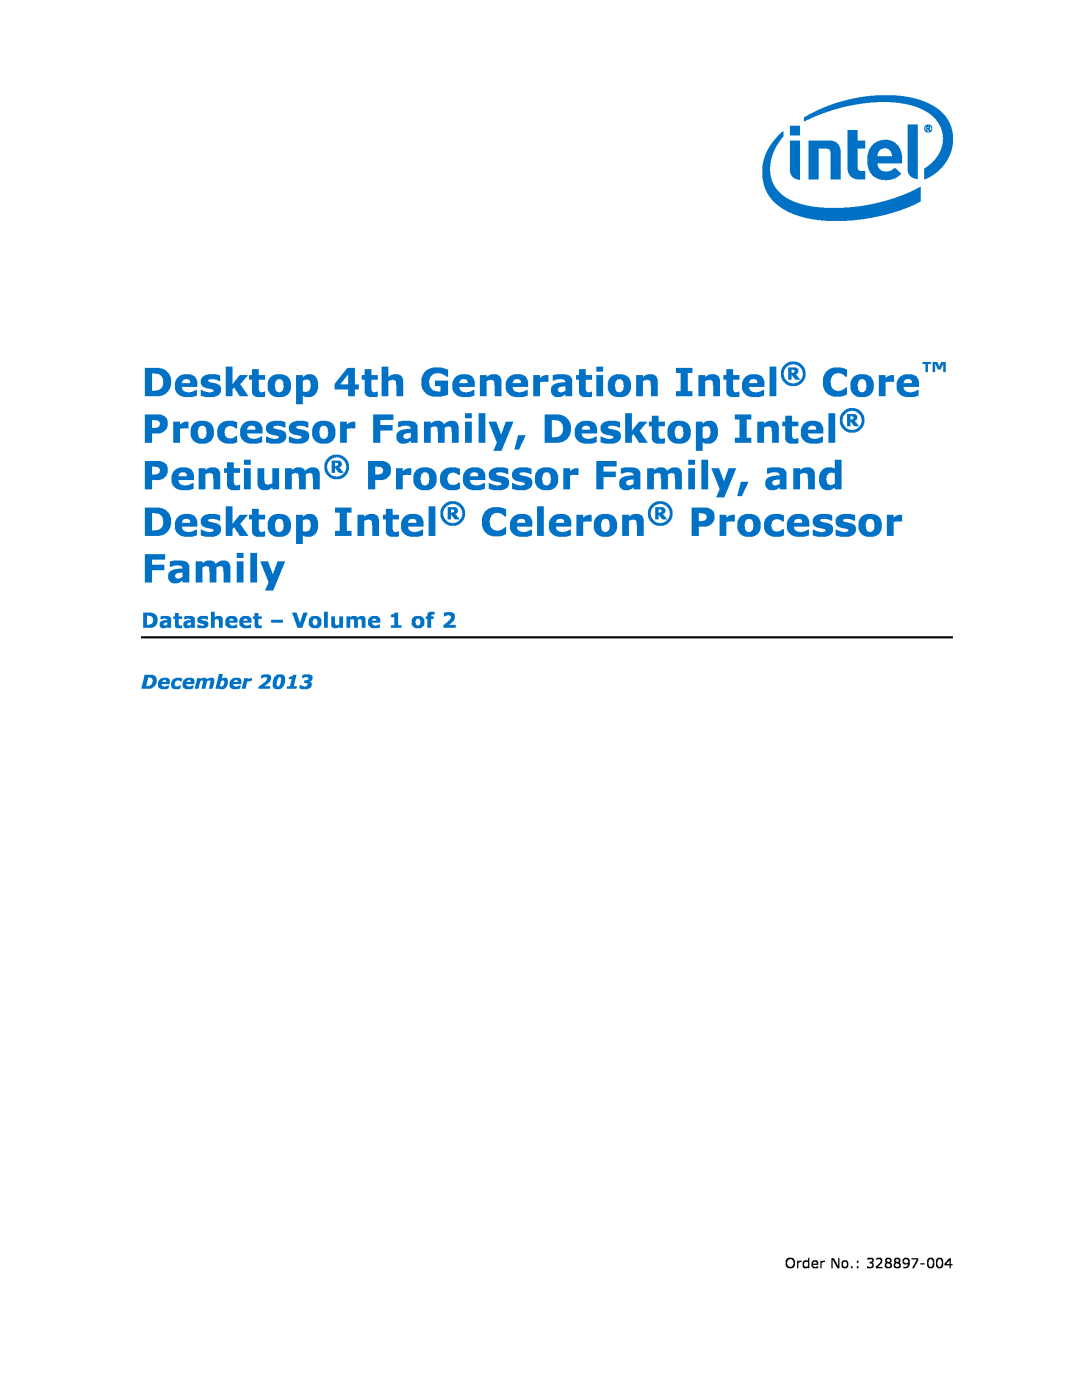 Intel BX80619I73970X warranty INTEL CORE i7 EXTREME EDITION, Desktop Processor Comparison Chart, Instructions, Intel 